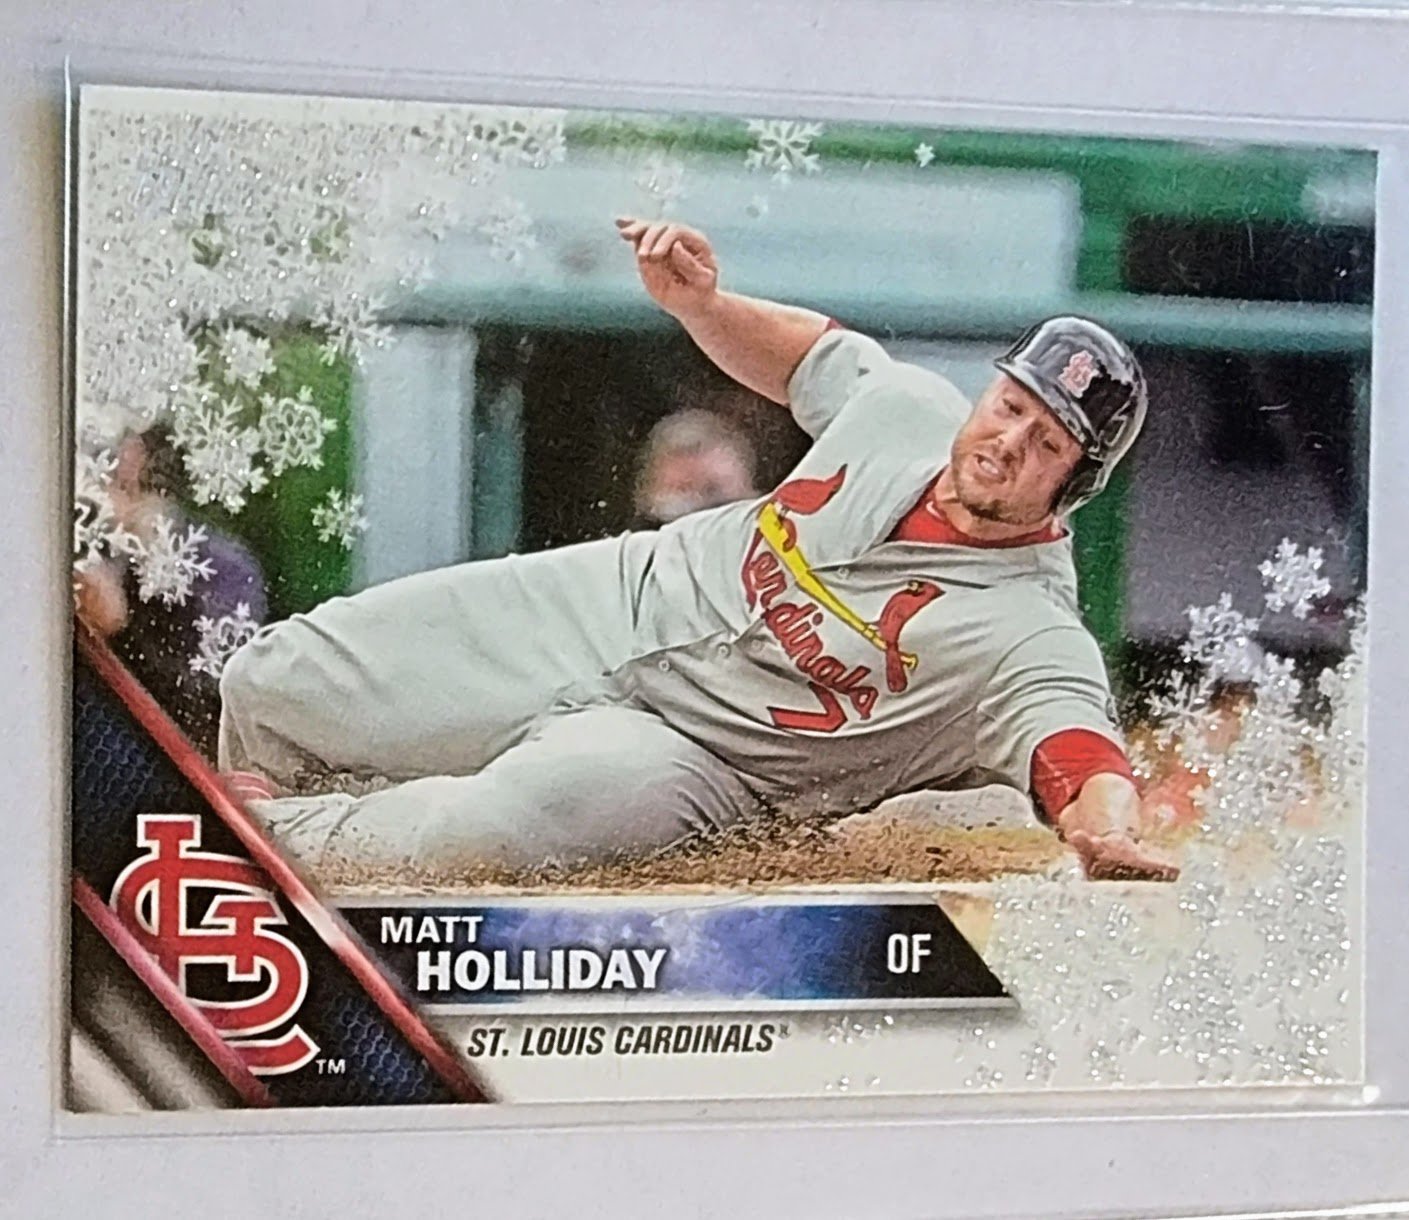 2016 Topps Matt Holiday Metallic Snowflake Baseball Card TPTV simple Xclusive Collectibles   